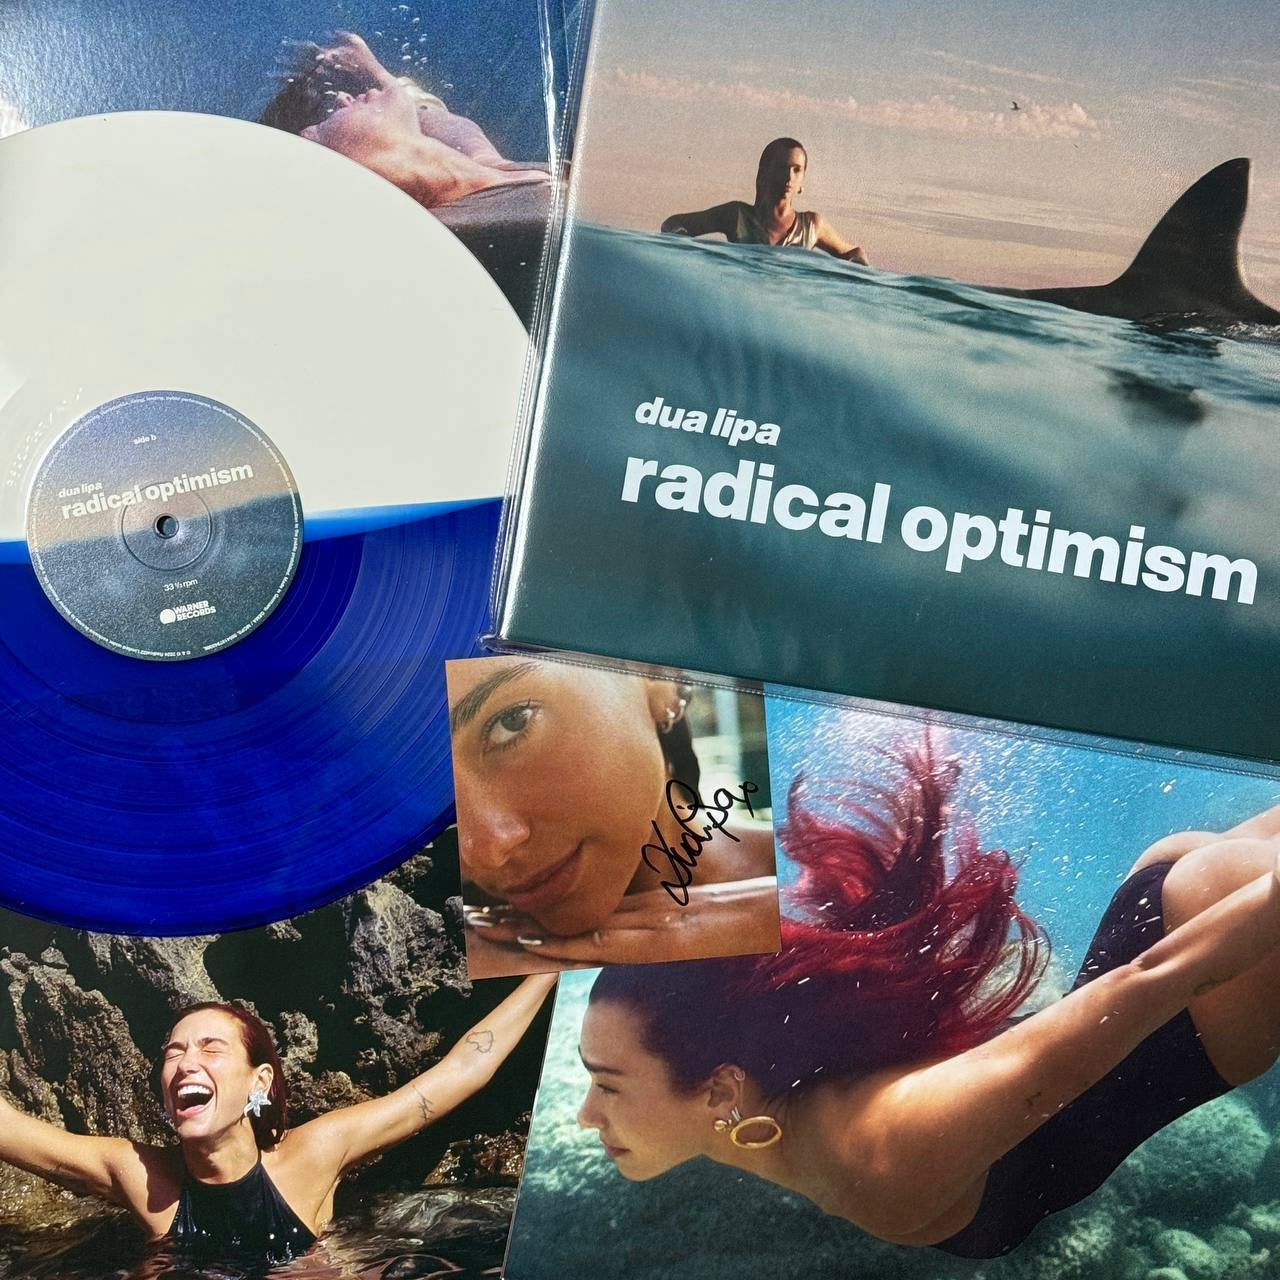 [SIGNED] Dua Lipa - Radical Optimism (Deluxe) LP Vinyl Record